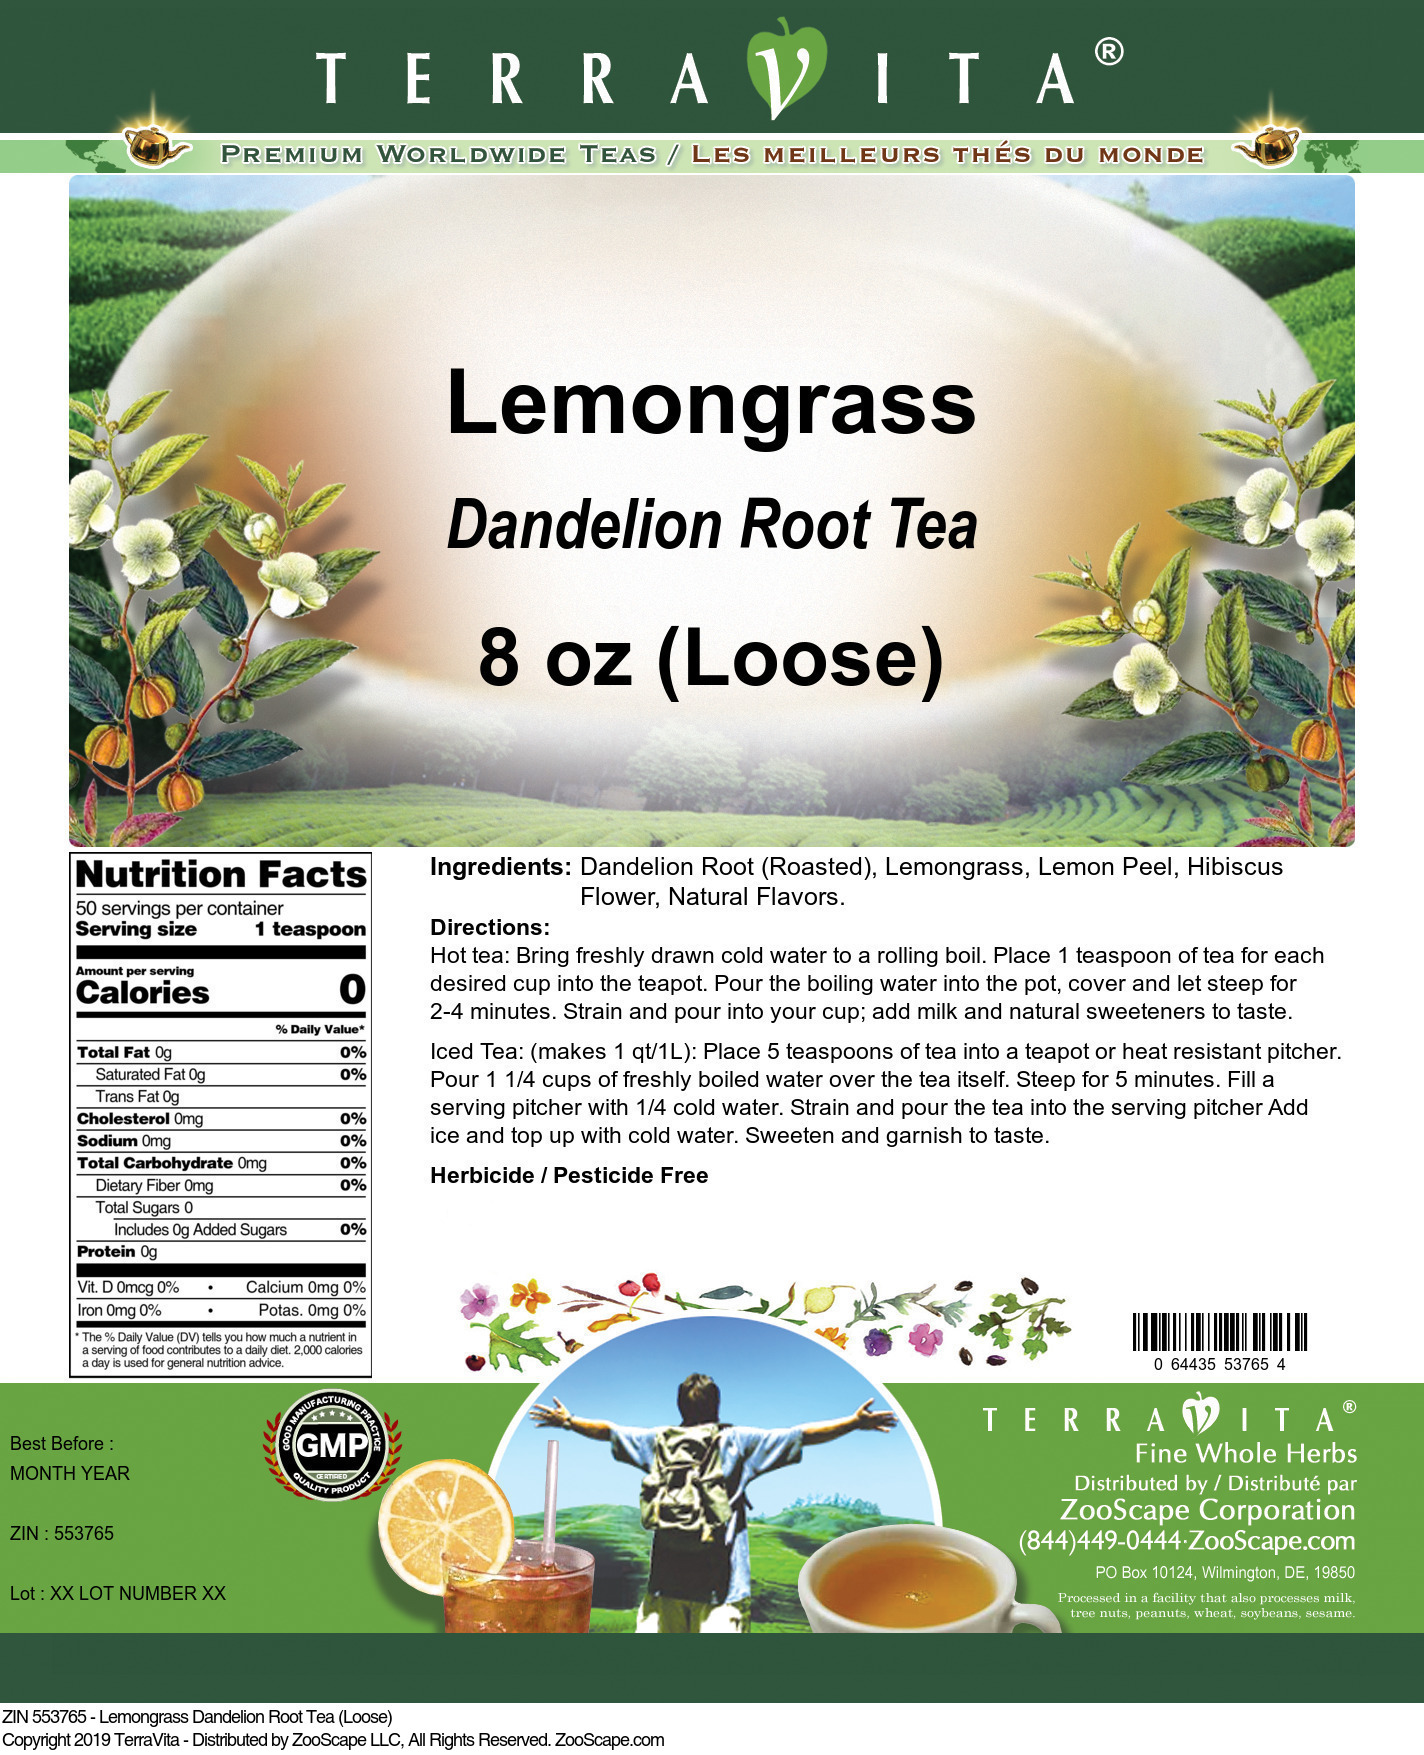 Lemongrass Dandelion Root Tea (Loose) - Label